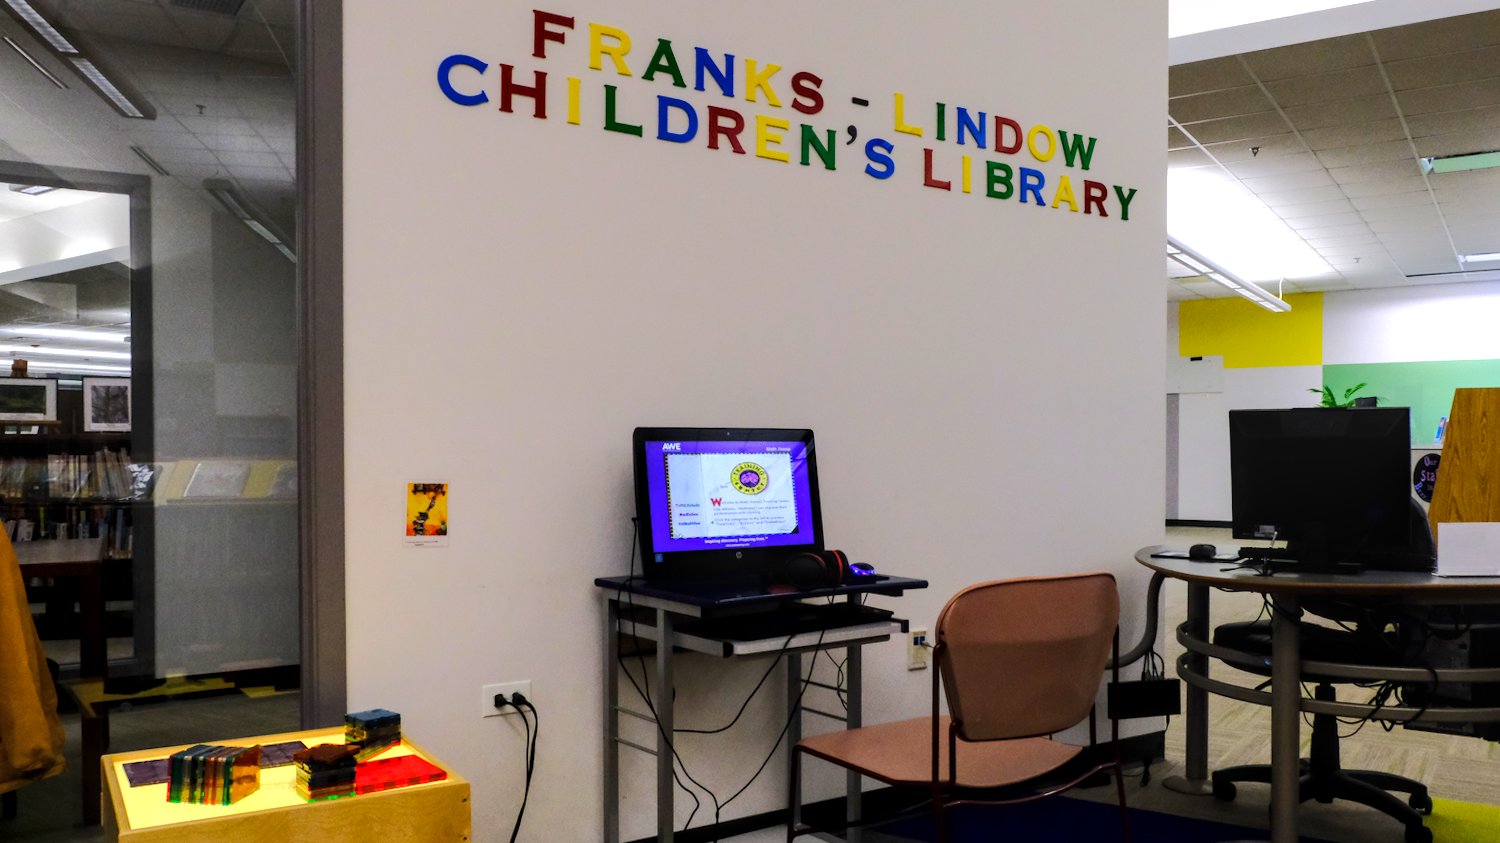 Franks - Lindow Children's Library.